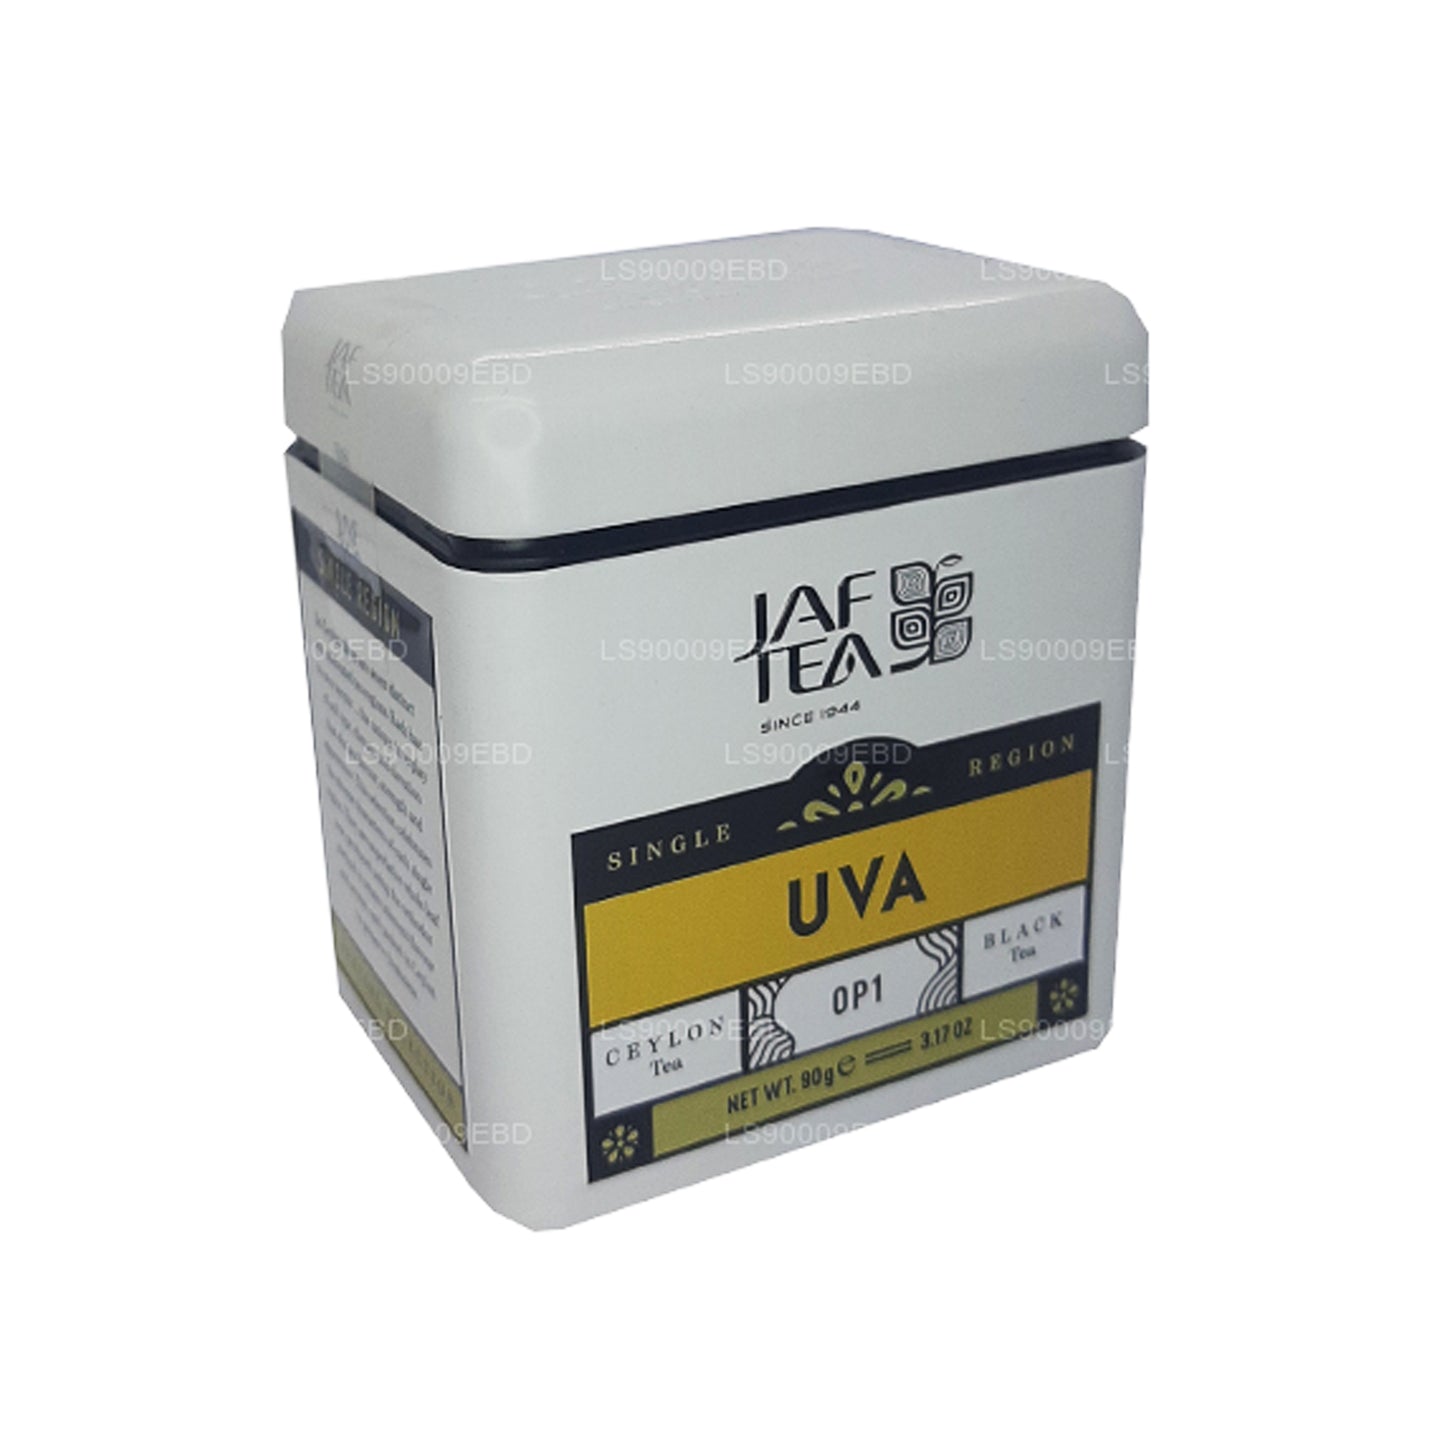 Jaf Tea Single Region Collection Uva OP1 (90 g) Dose